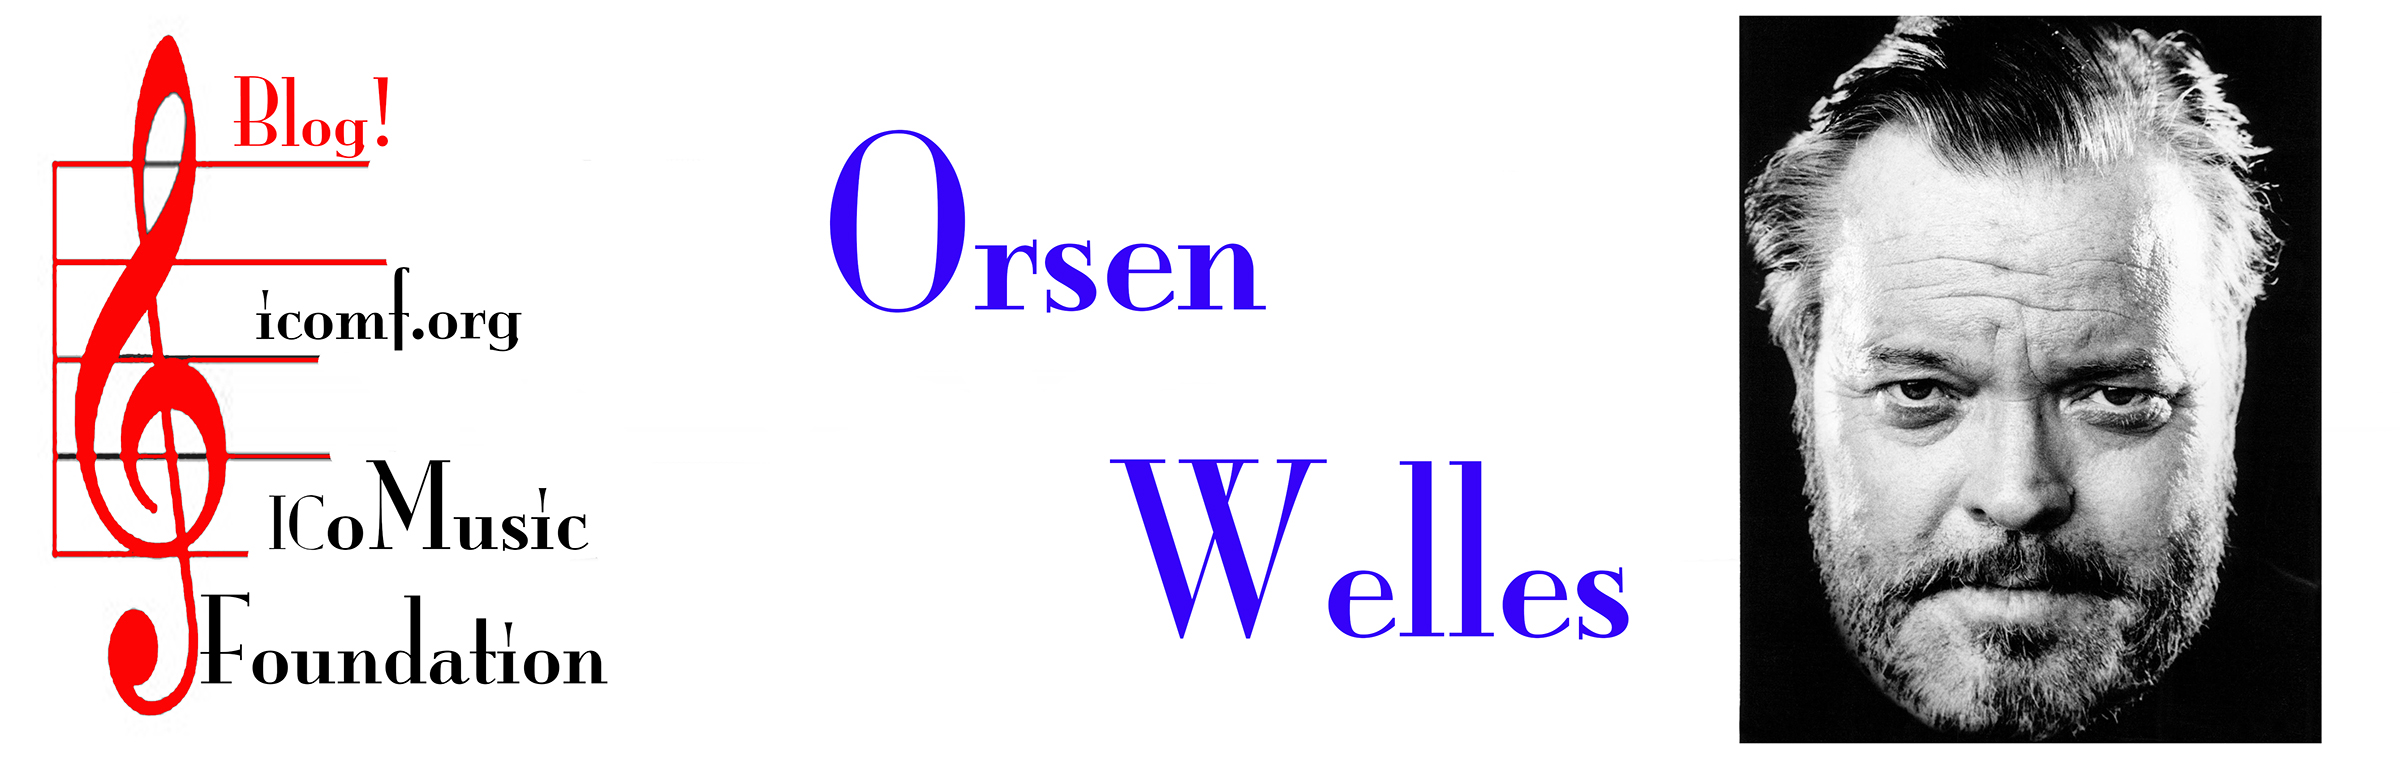 Orsen Welles Blog Banner